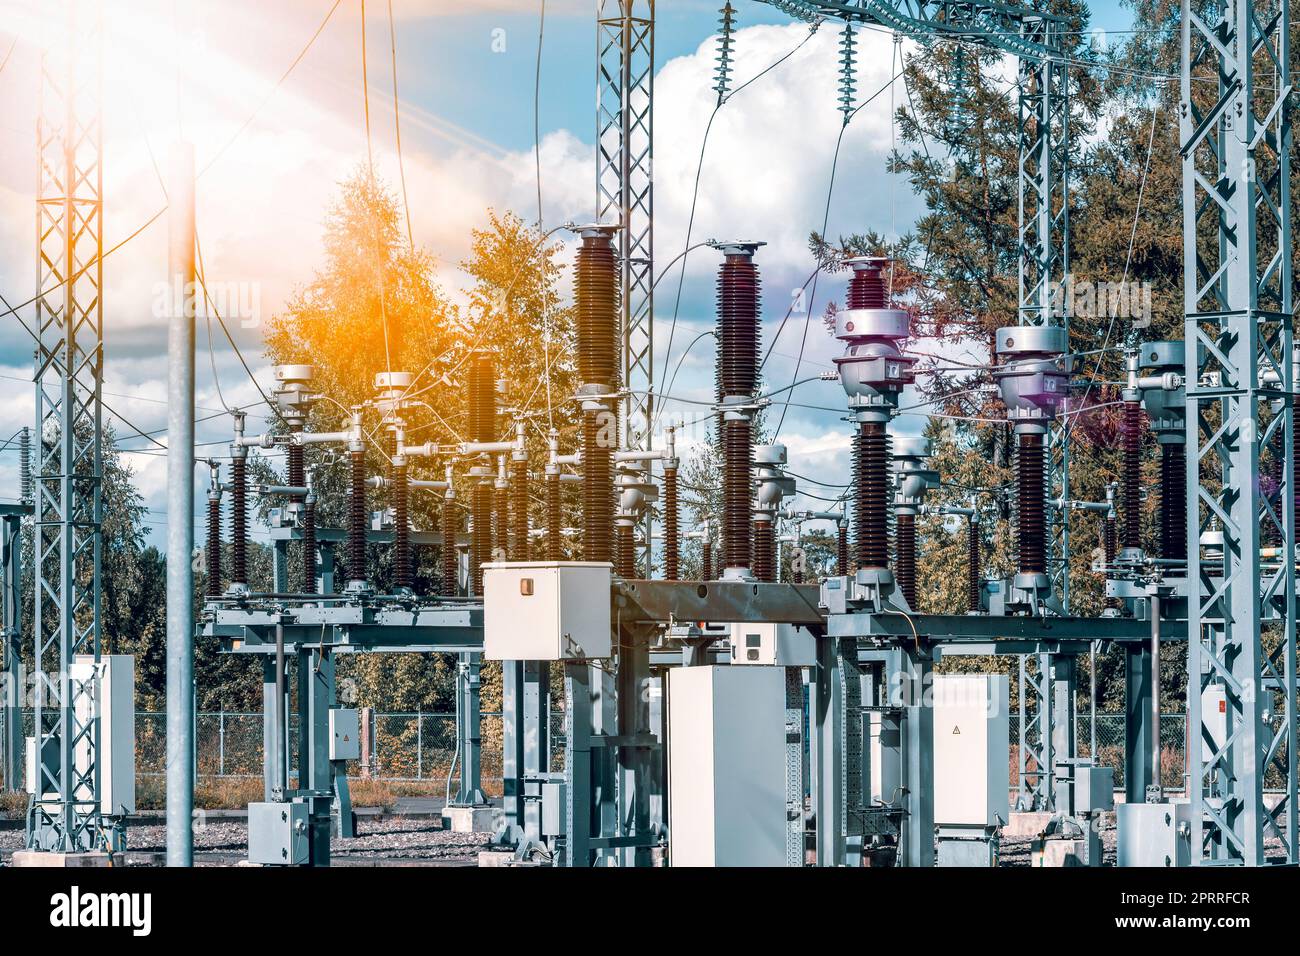 High voltage power transformer substation Stock Photo